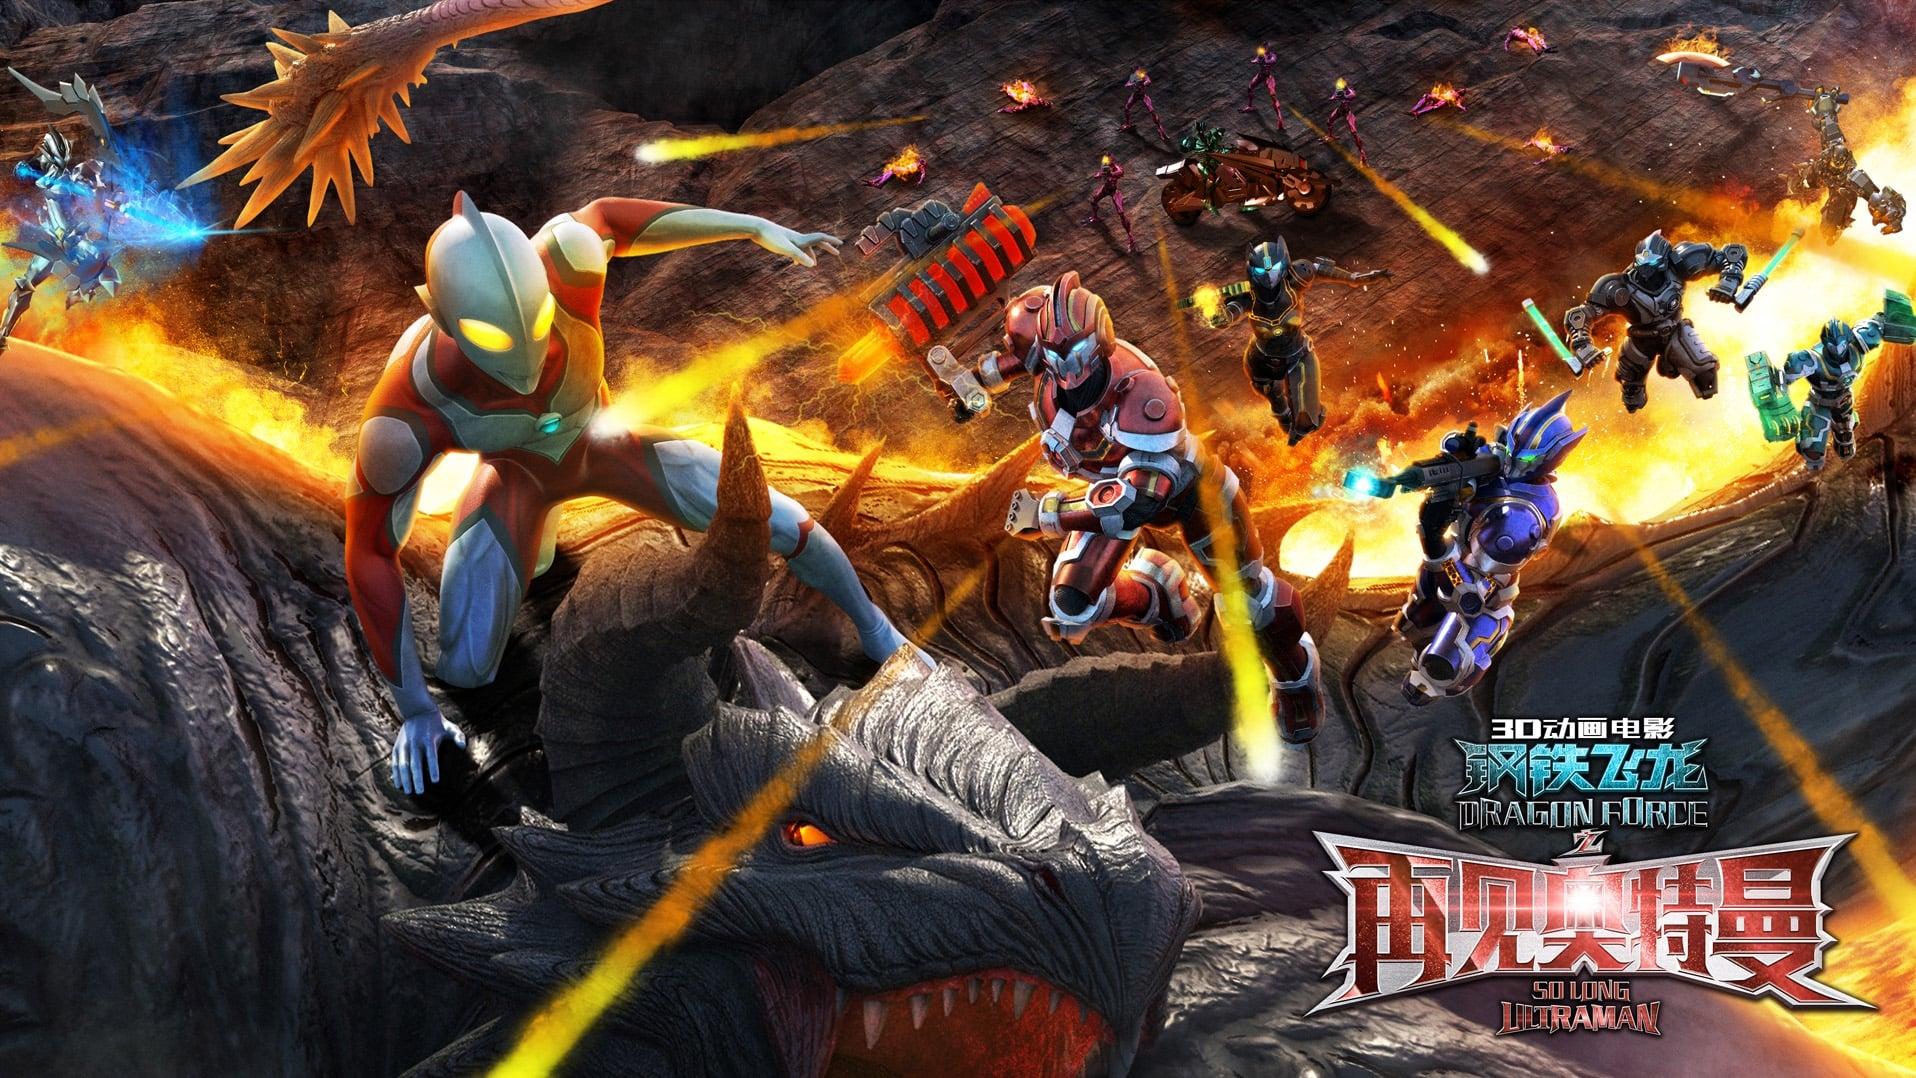 Dragon Force: So Long Ultraman backdrop